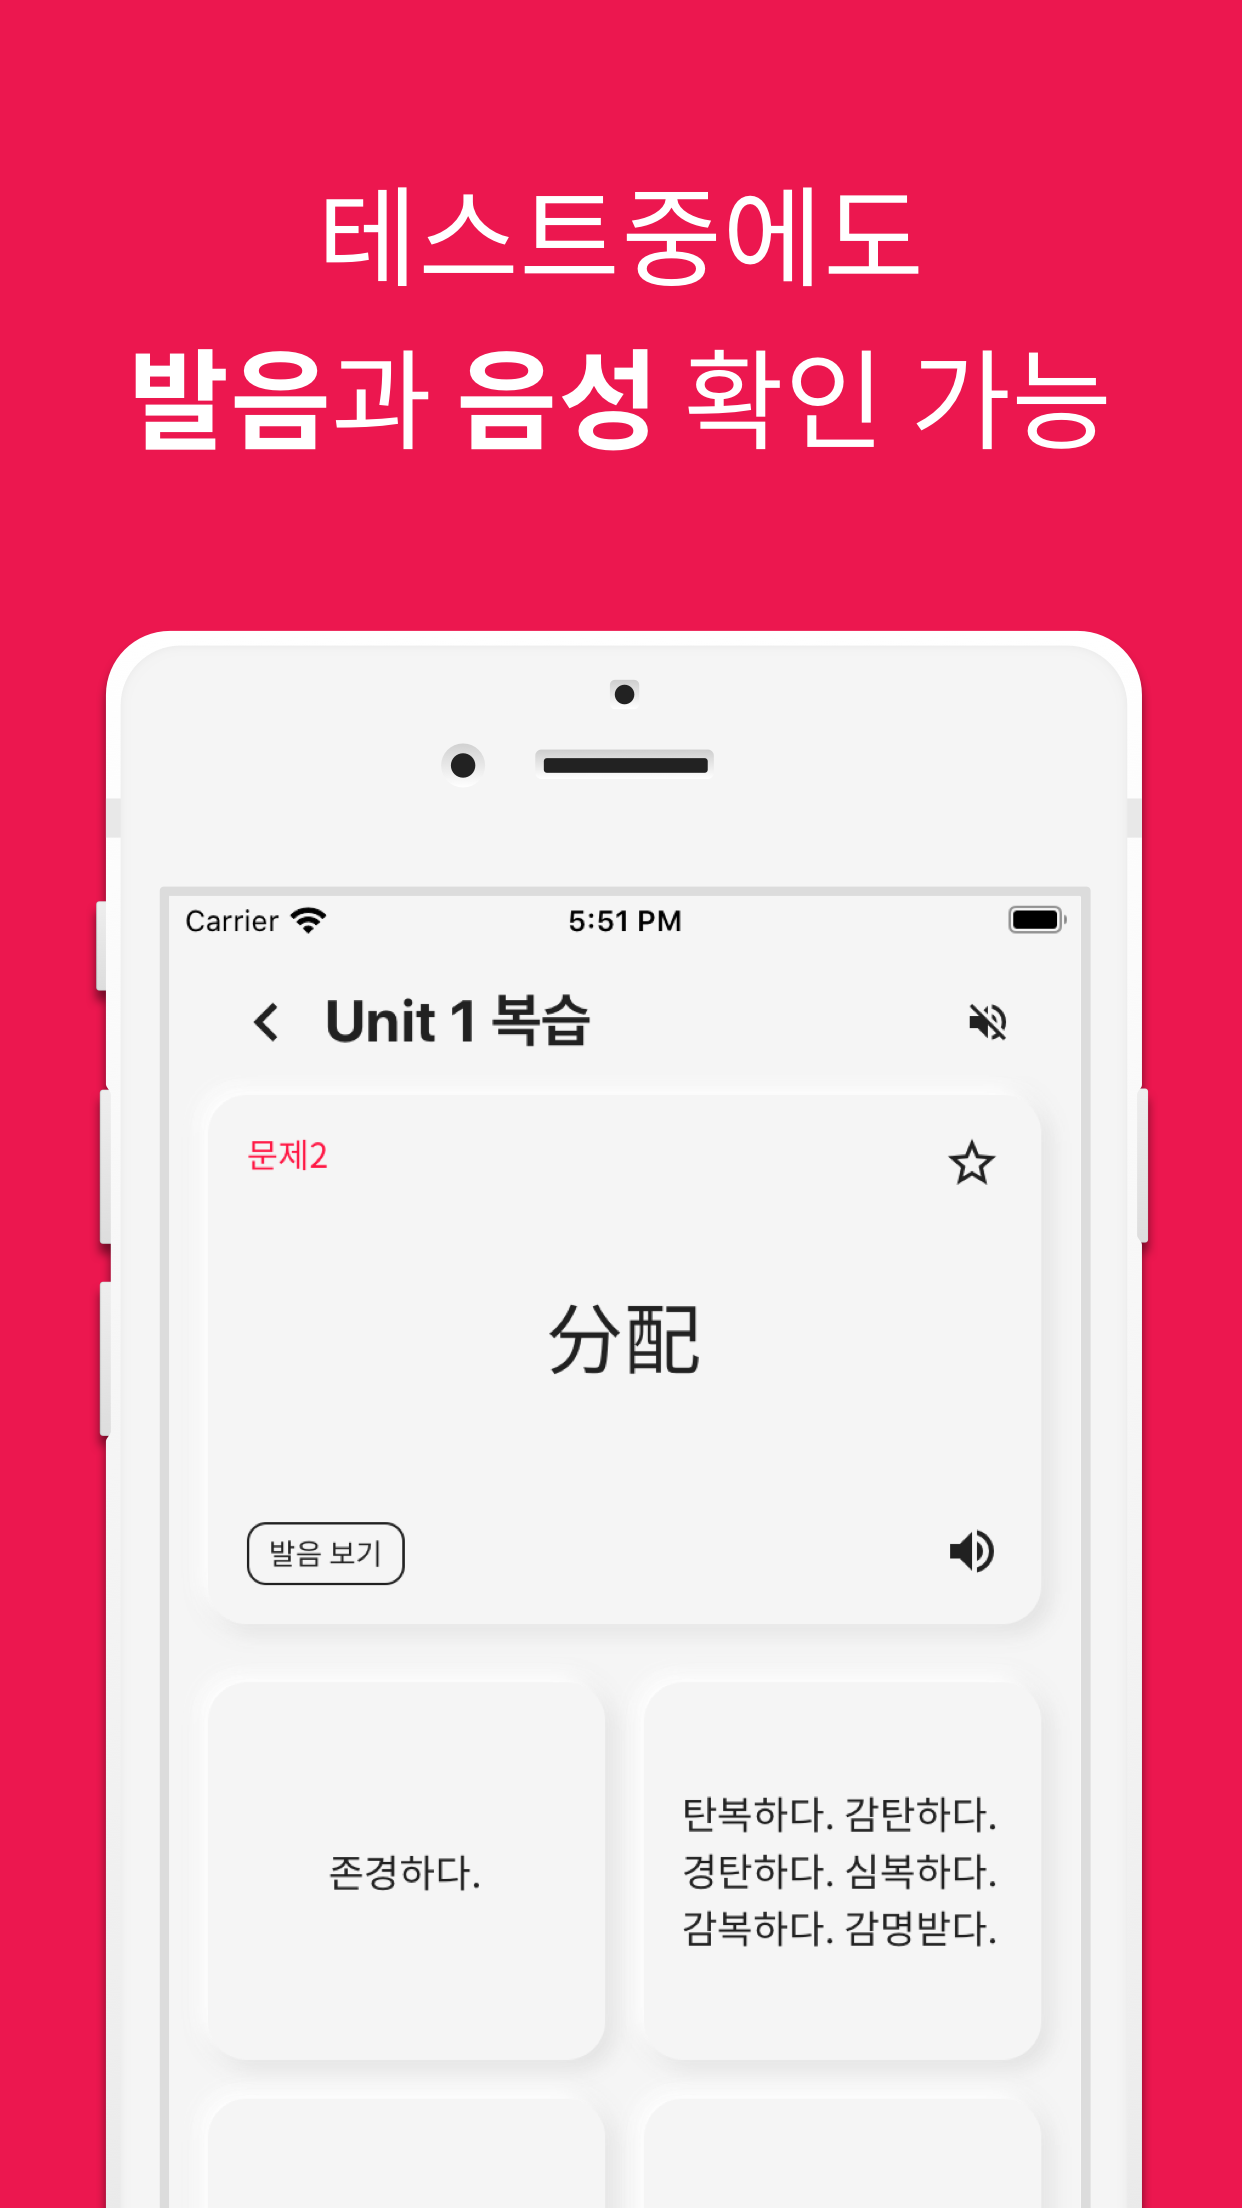 HSK 중국어 단어앱 - 앱 스크린 샷7